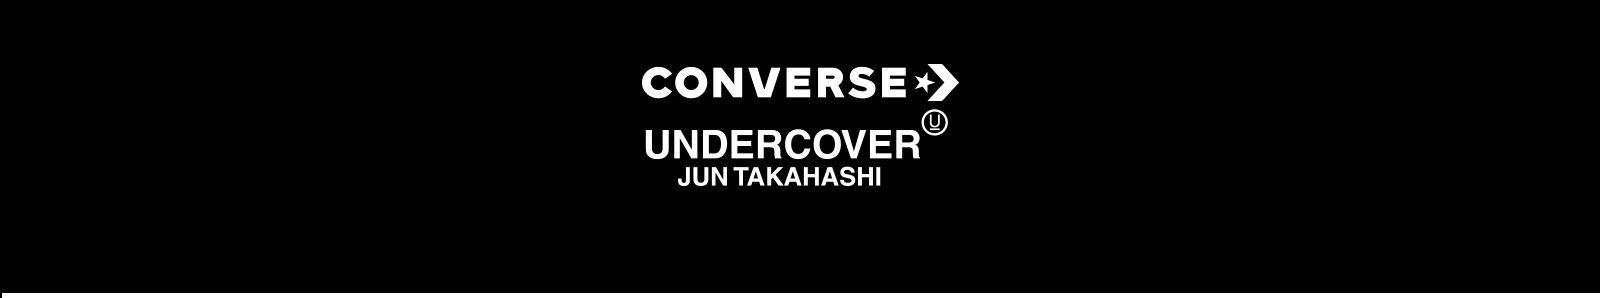 Jun Takahashi Undercover Logo - Converse Undercover. Limited Edition. Converse.com